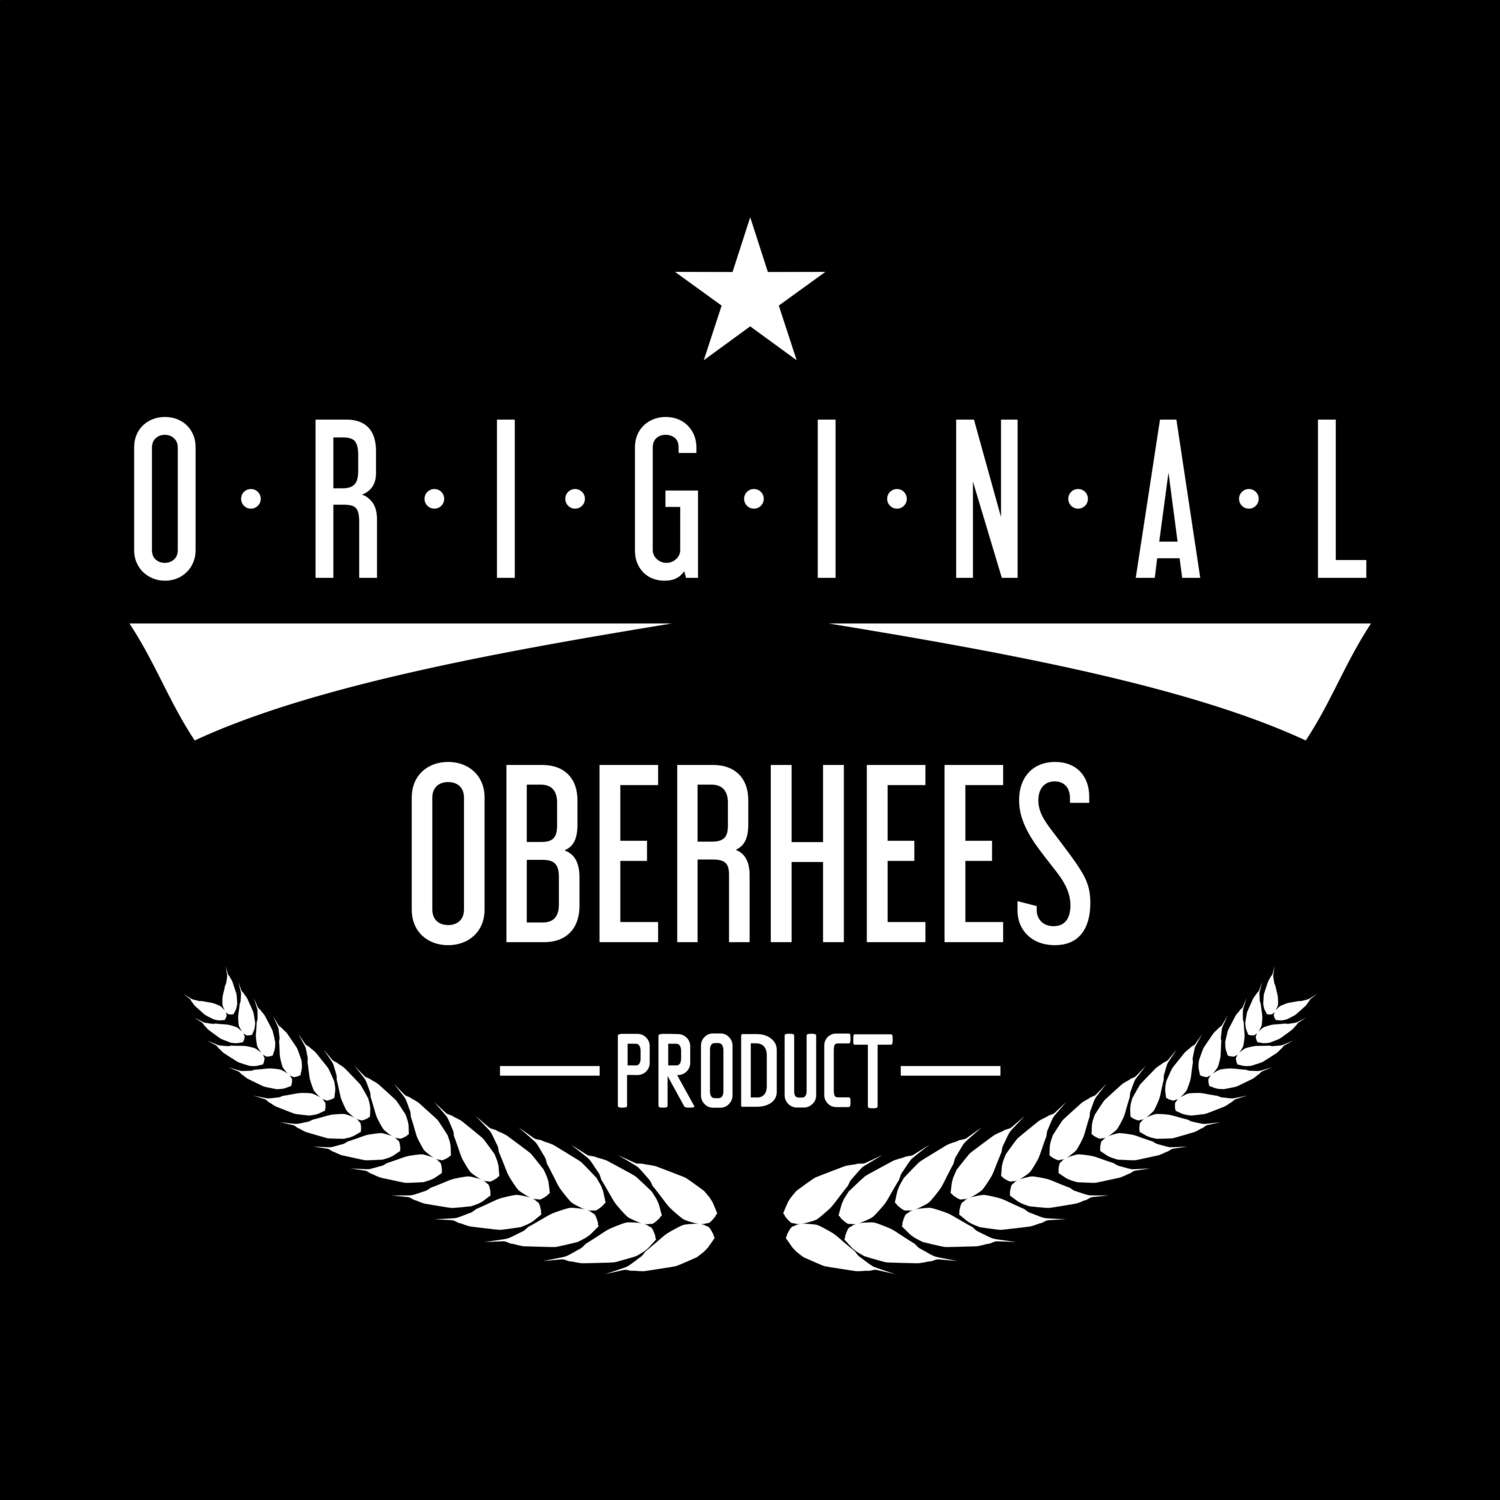 Oberhees T-Shirt »Original Product«